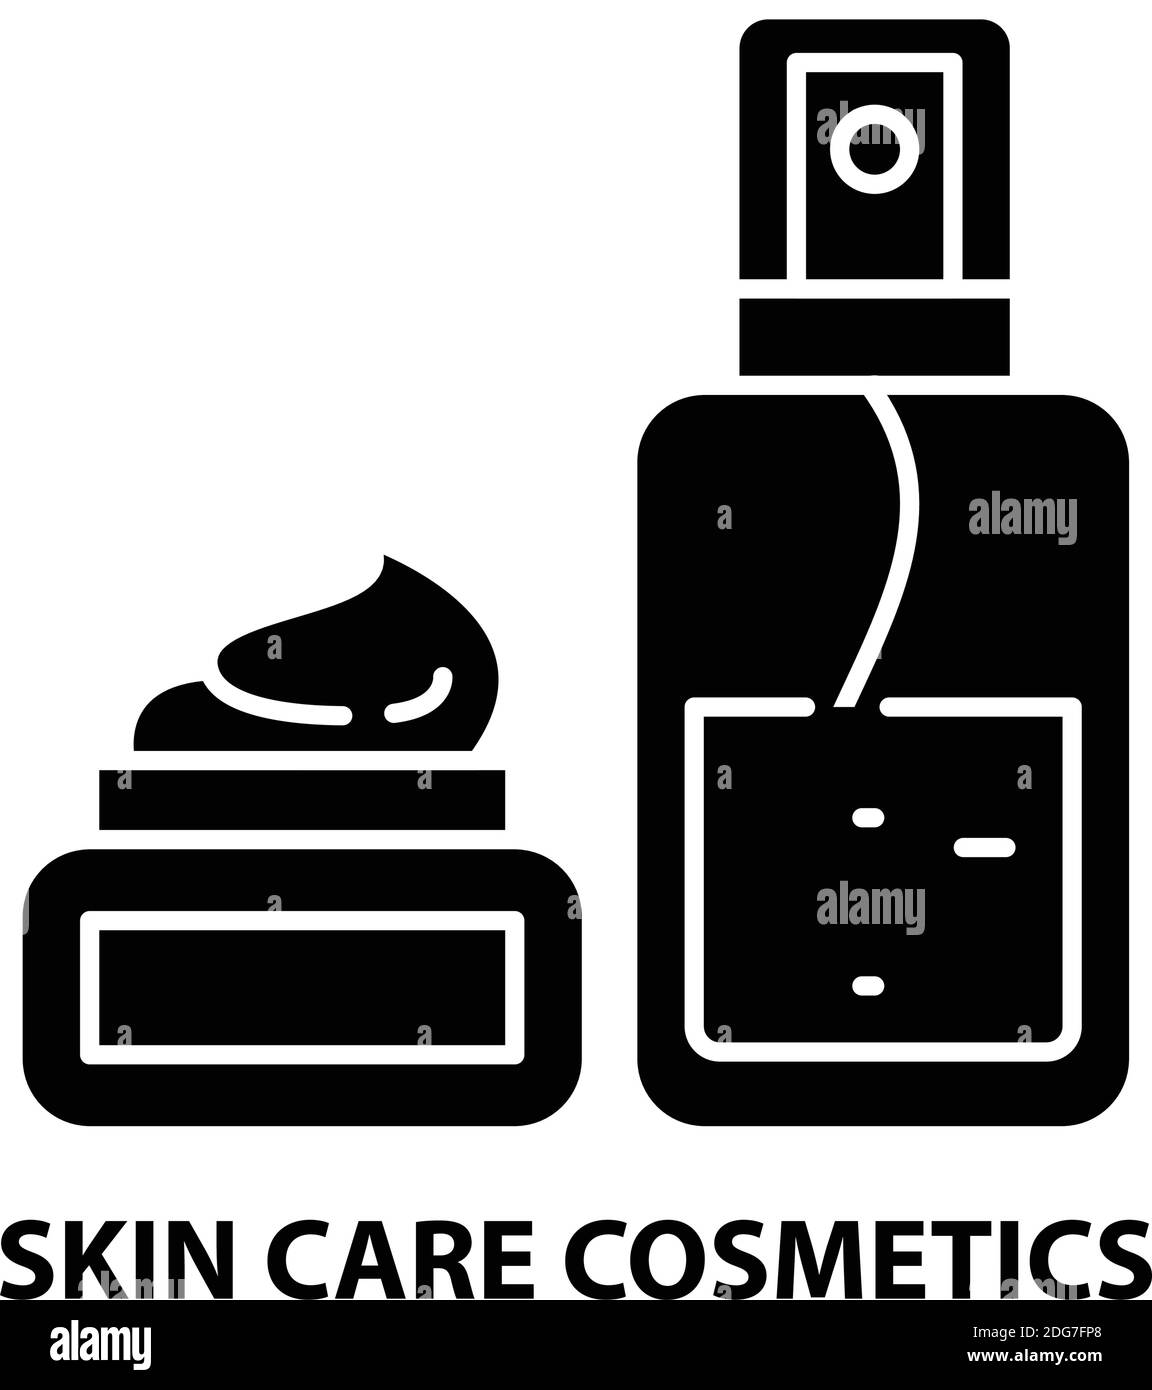 skin care cosmetics icon, black vector sign with editable strokes, concept illustration Stock Vector